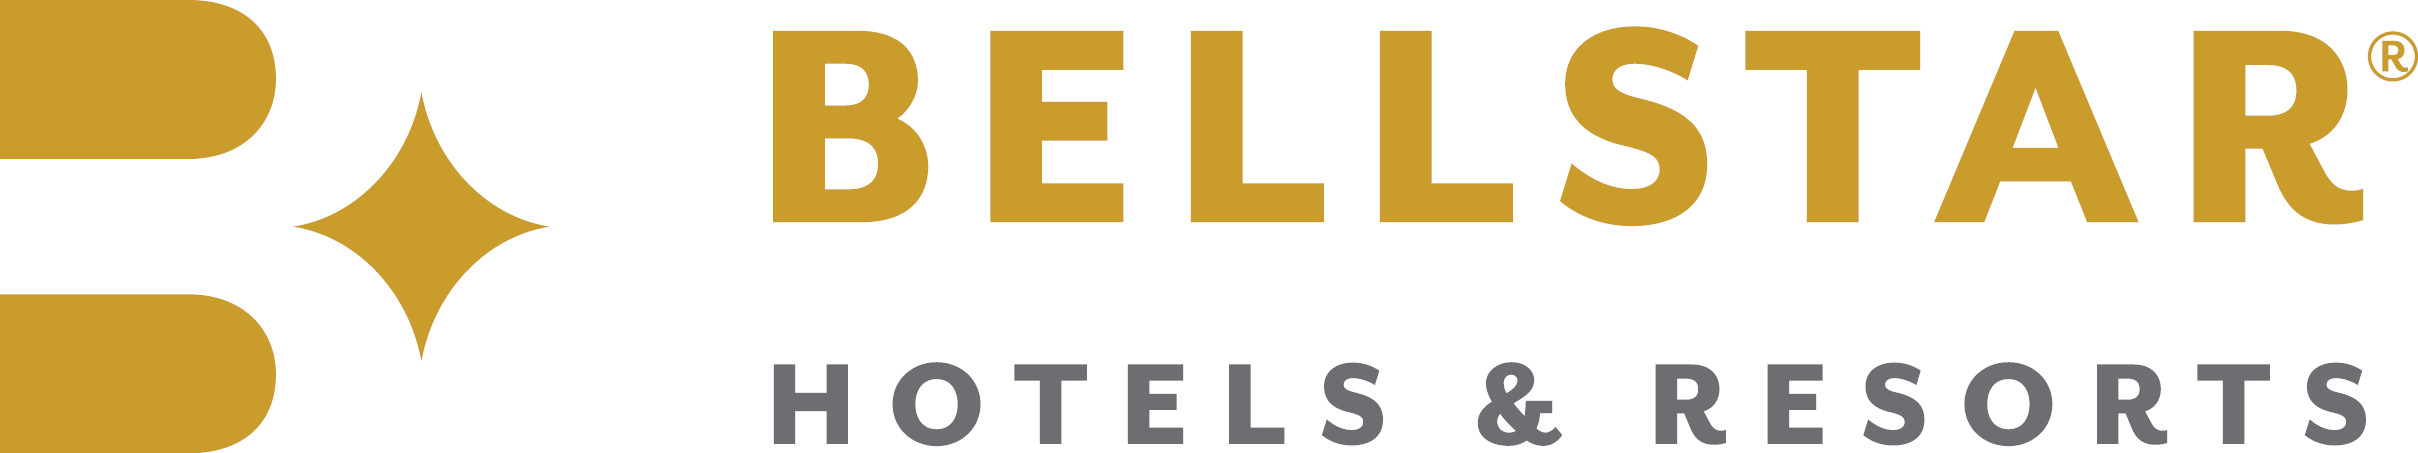 Bellstar-logo-horizontal-CMYK.jpg